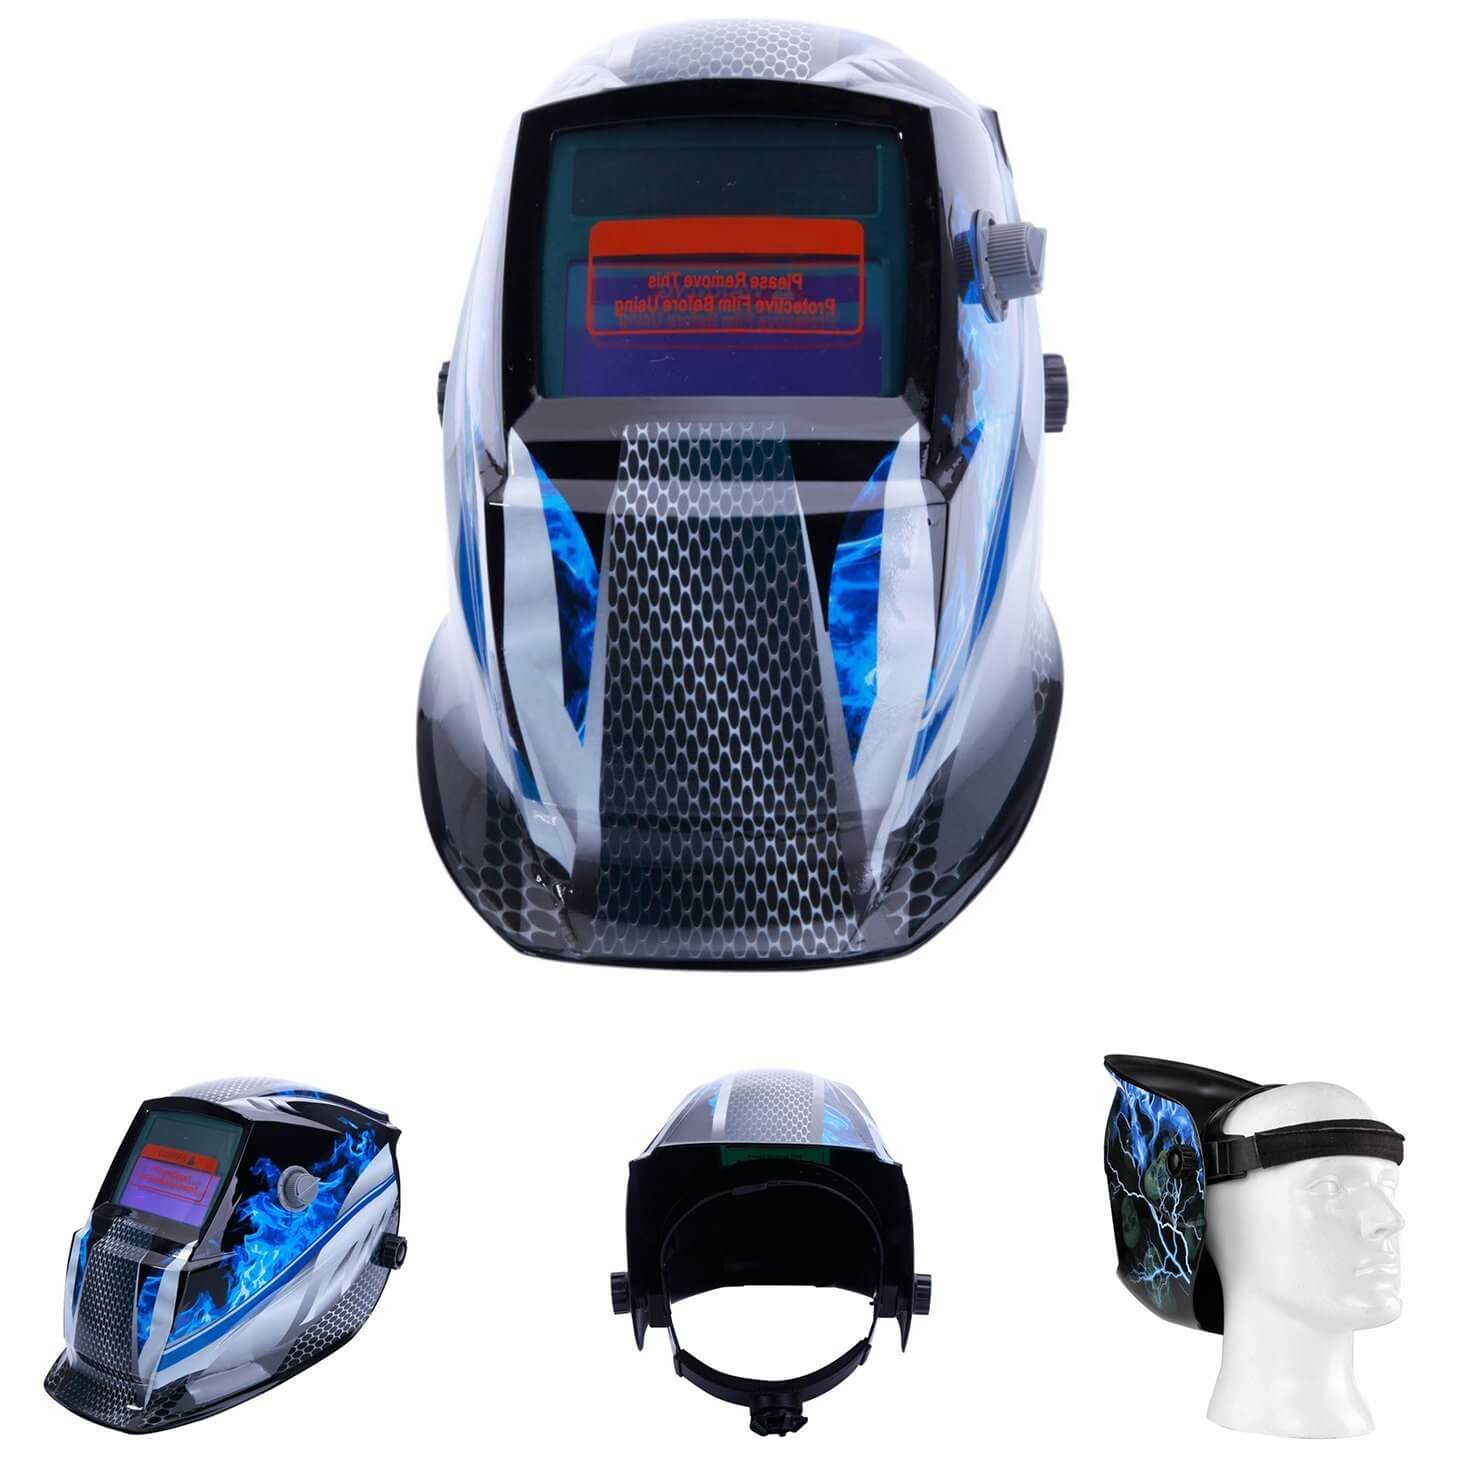 Welding Helmet Mask Solar Auto Darkening Adjustable Shade Range